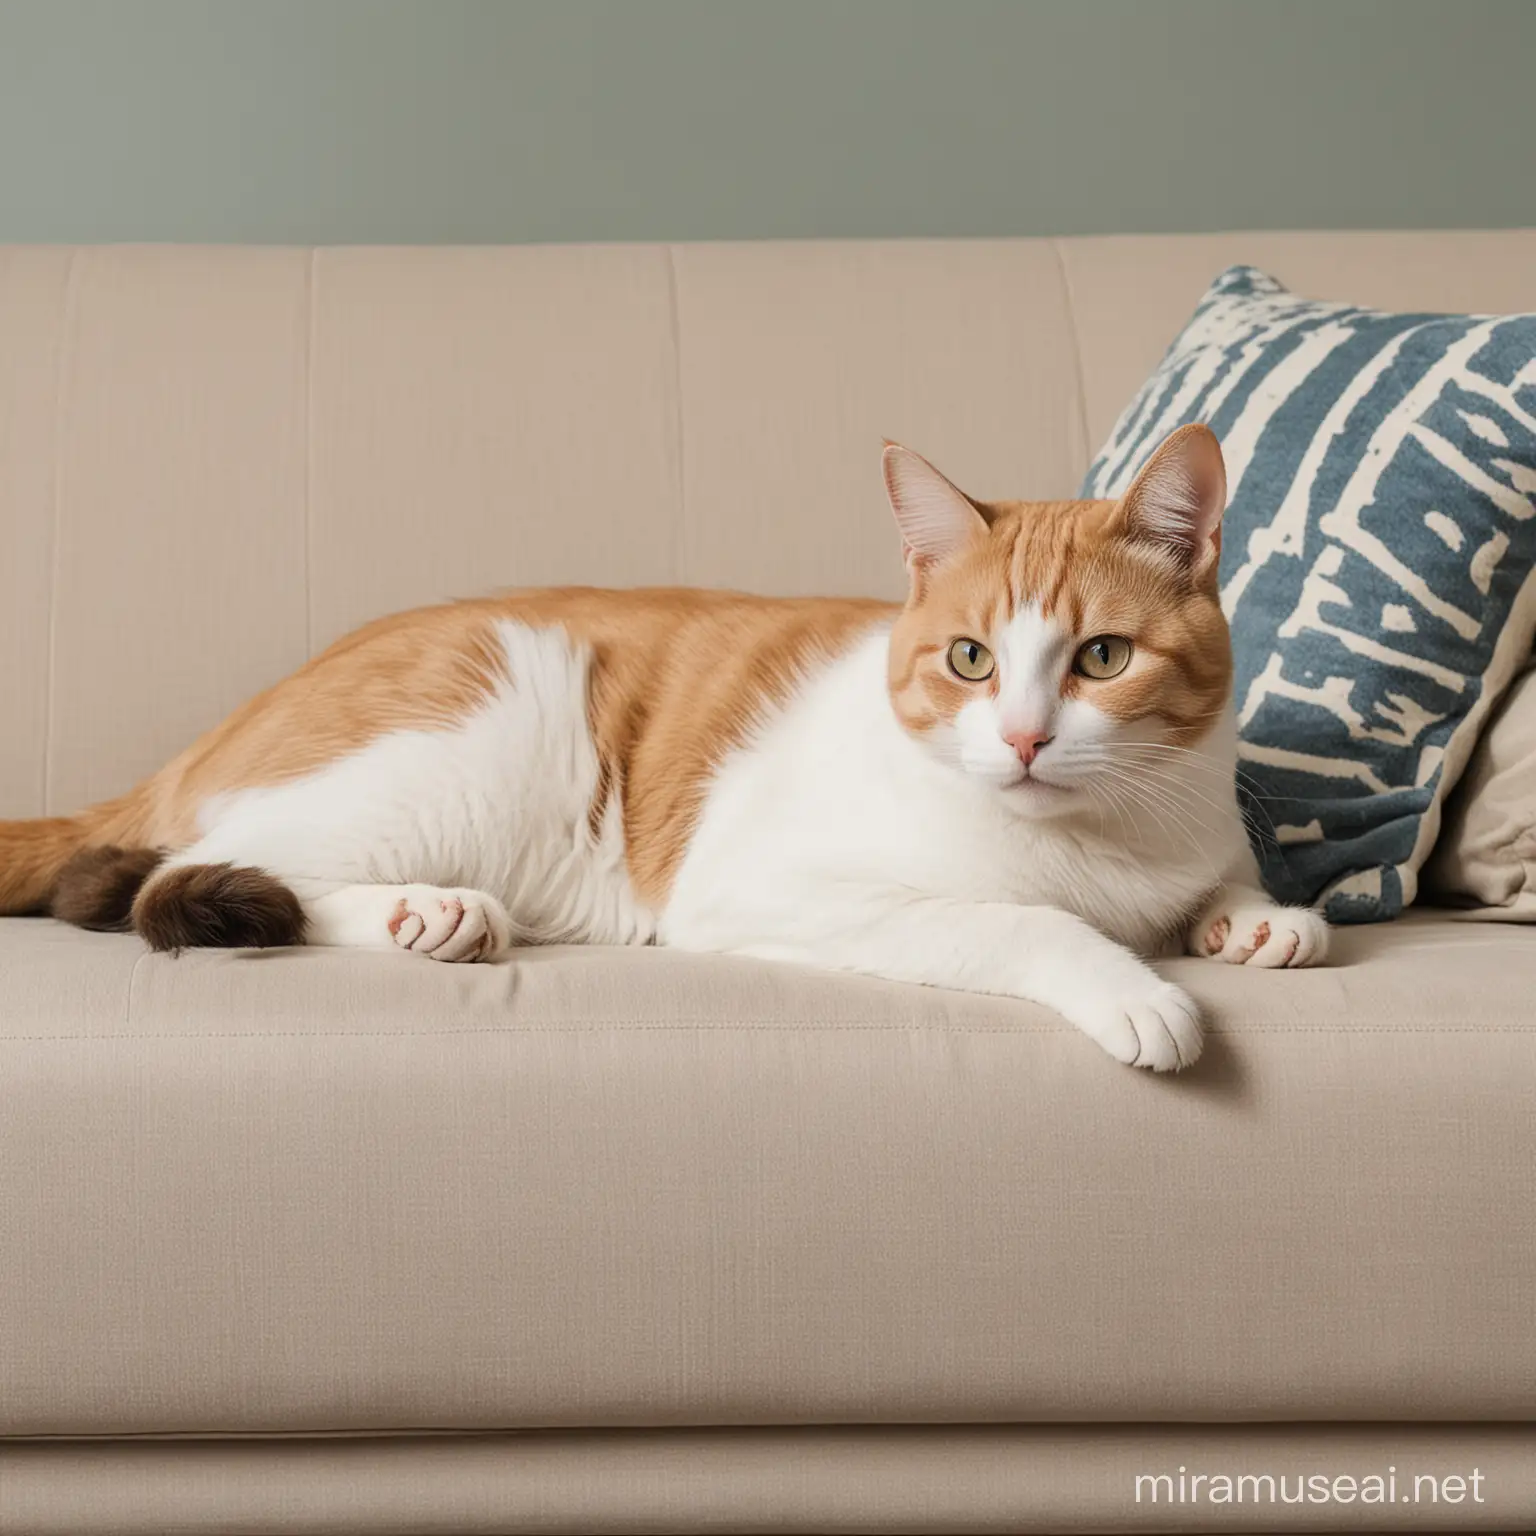 Fuzzy Feline Relaxing on Plush Sofa